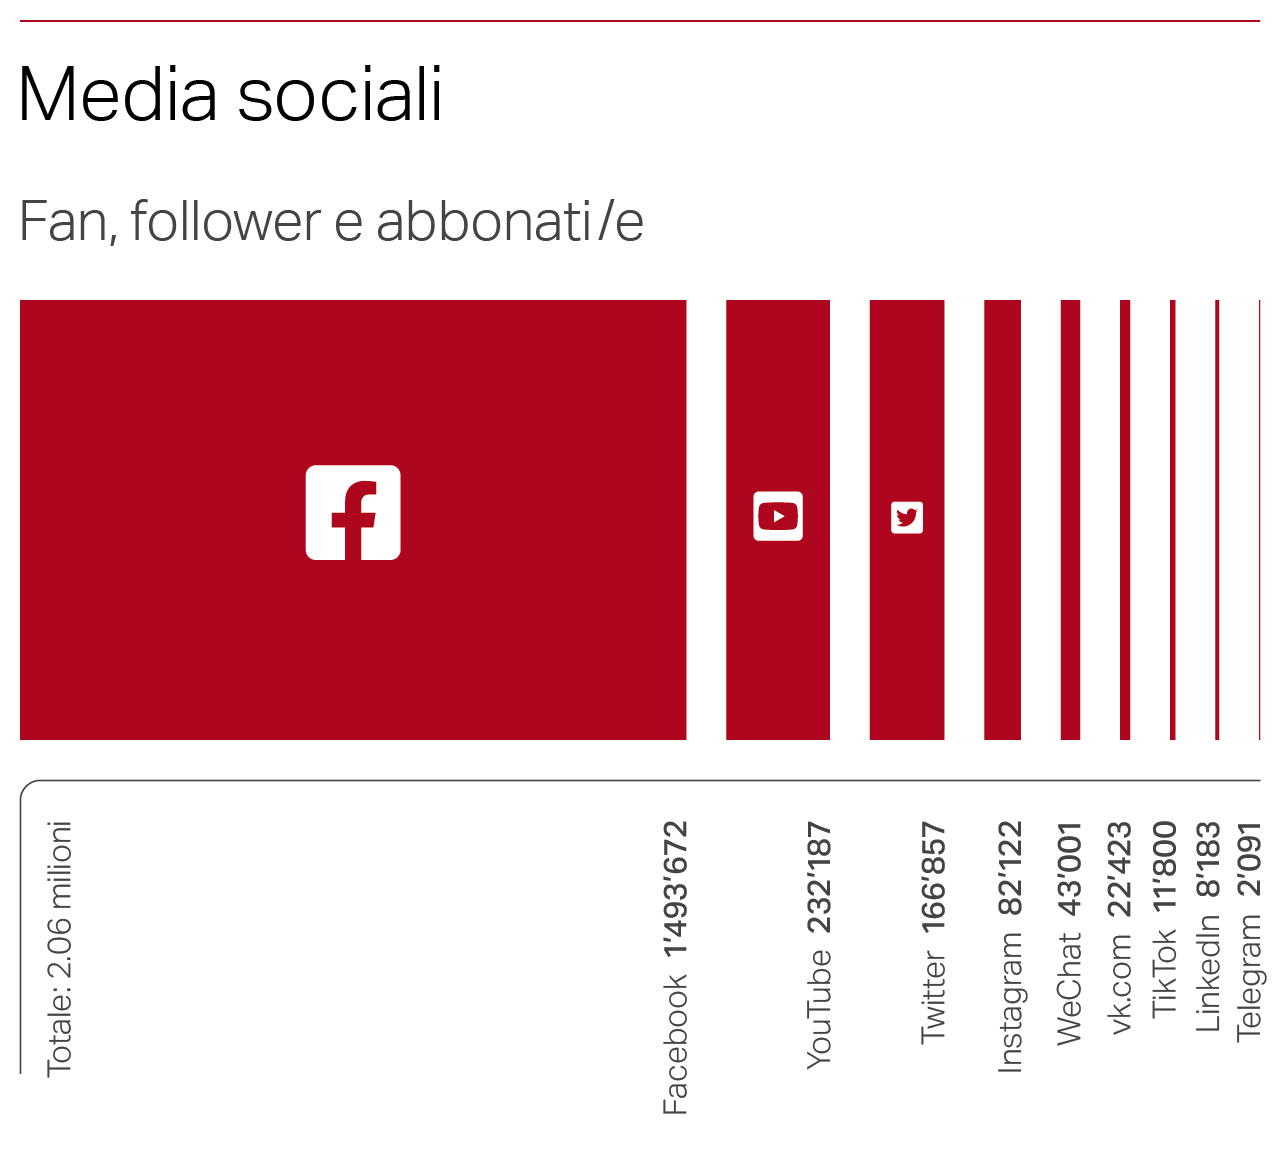 Statistiche social media